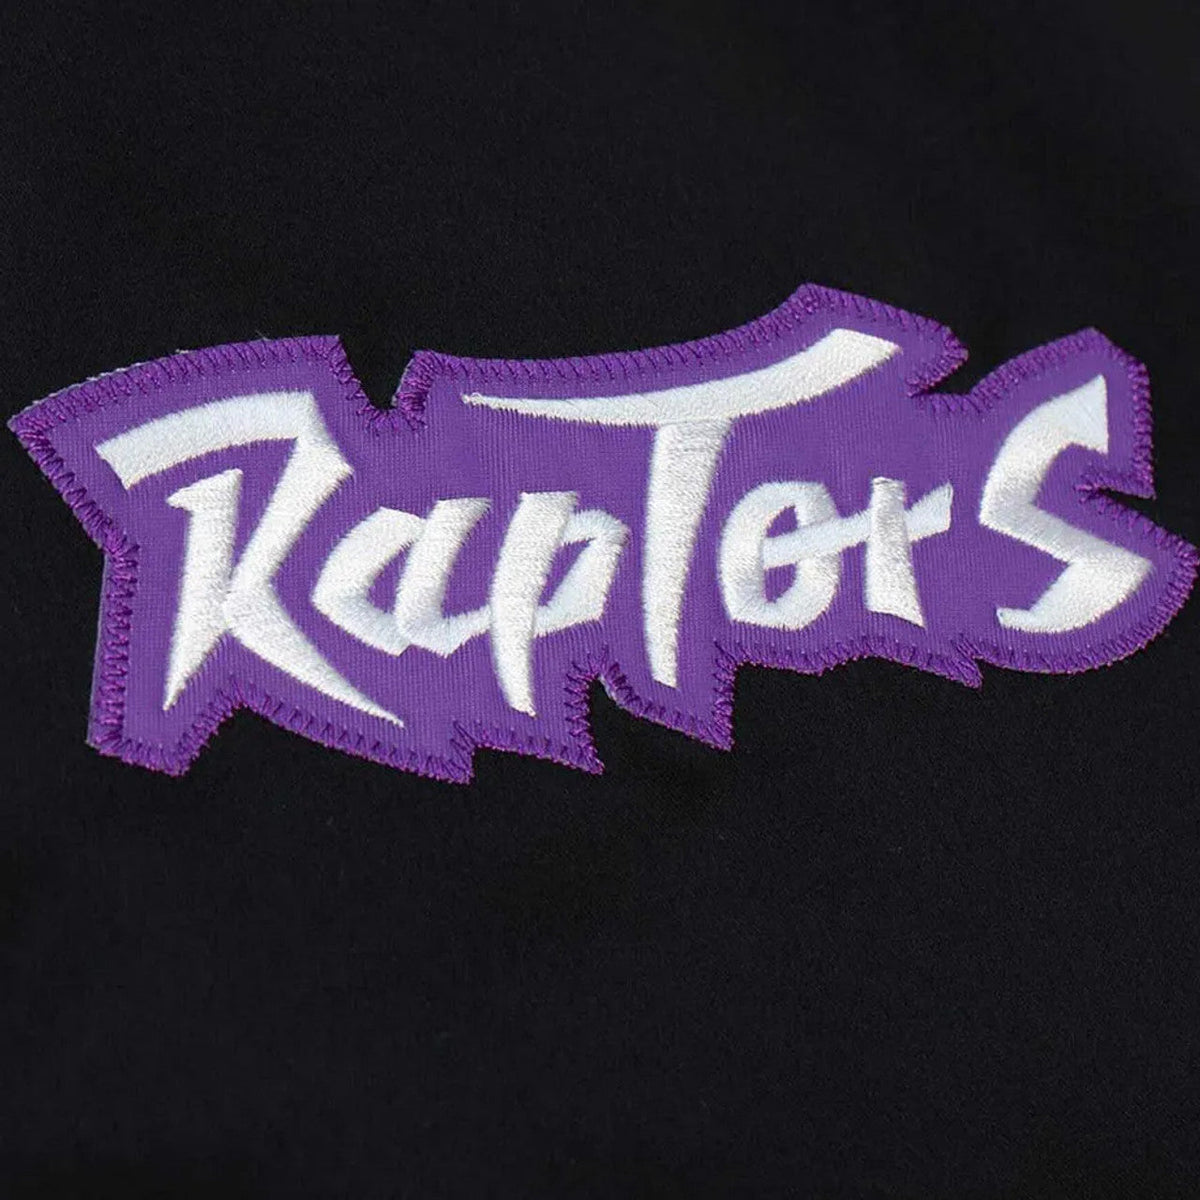 Toronto Raptors Black Jacket